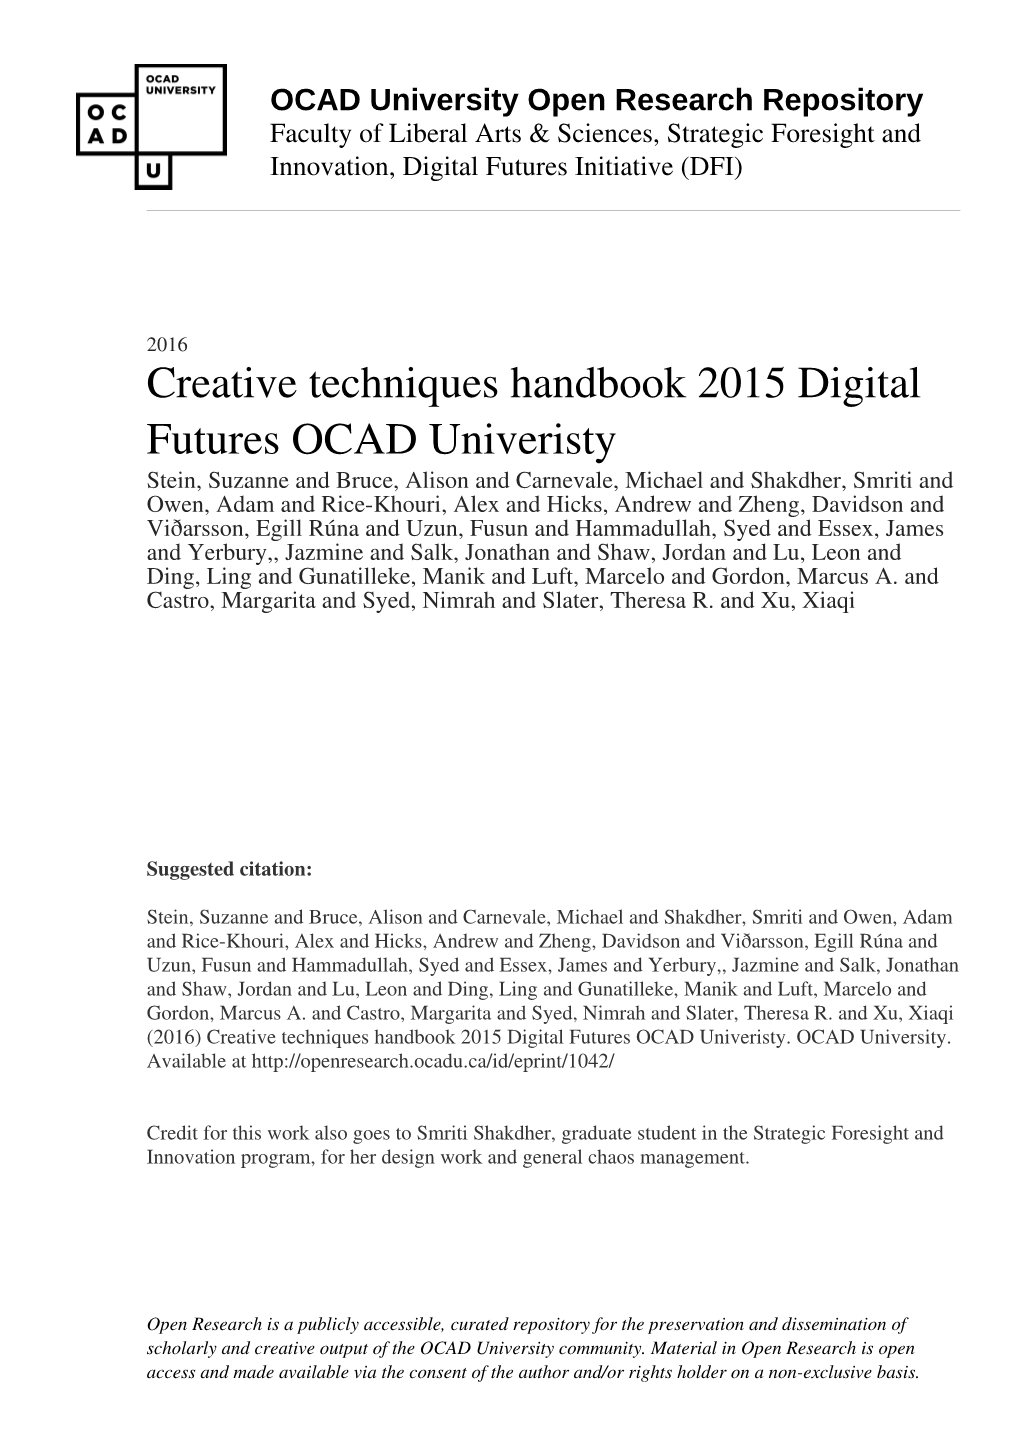 Creative Techniques Handbook 2015 Digital Futures OCAD Univeristy